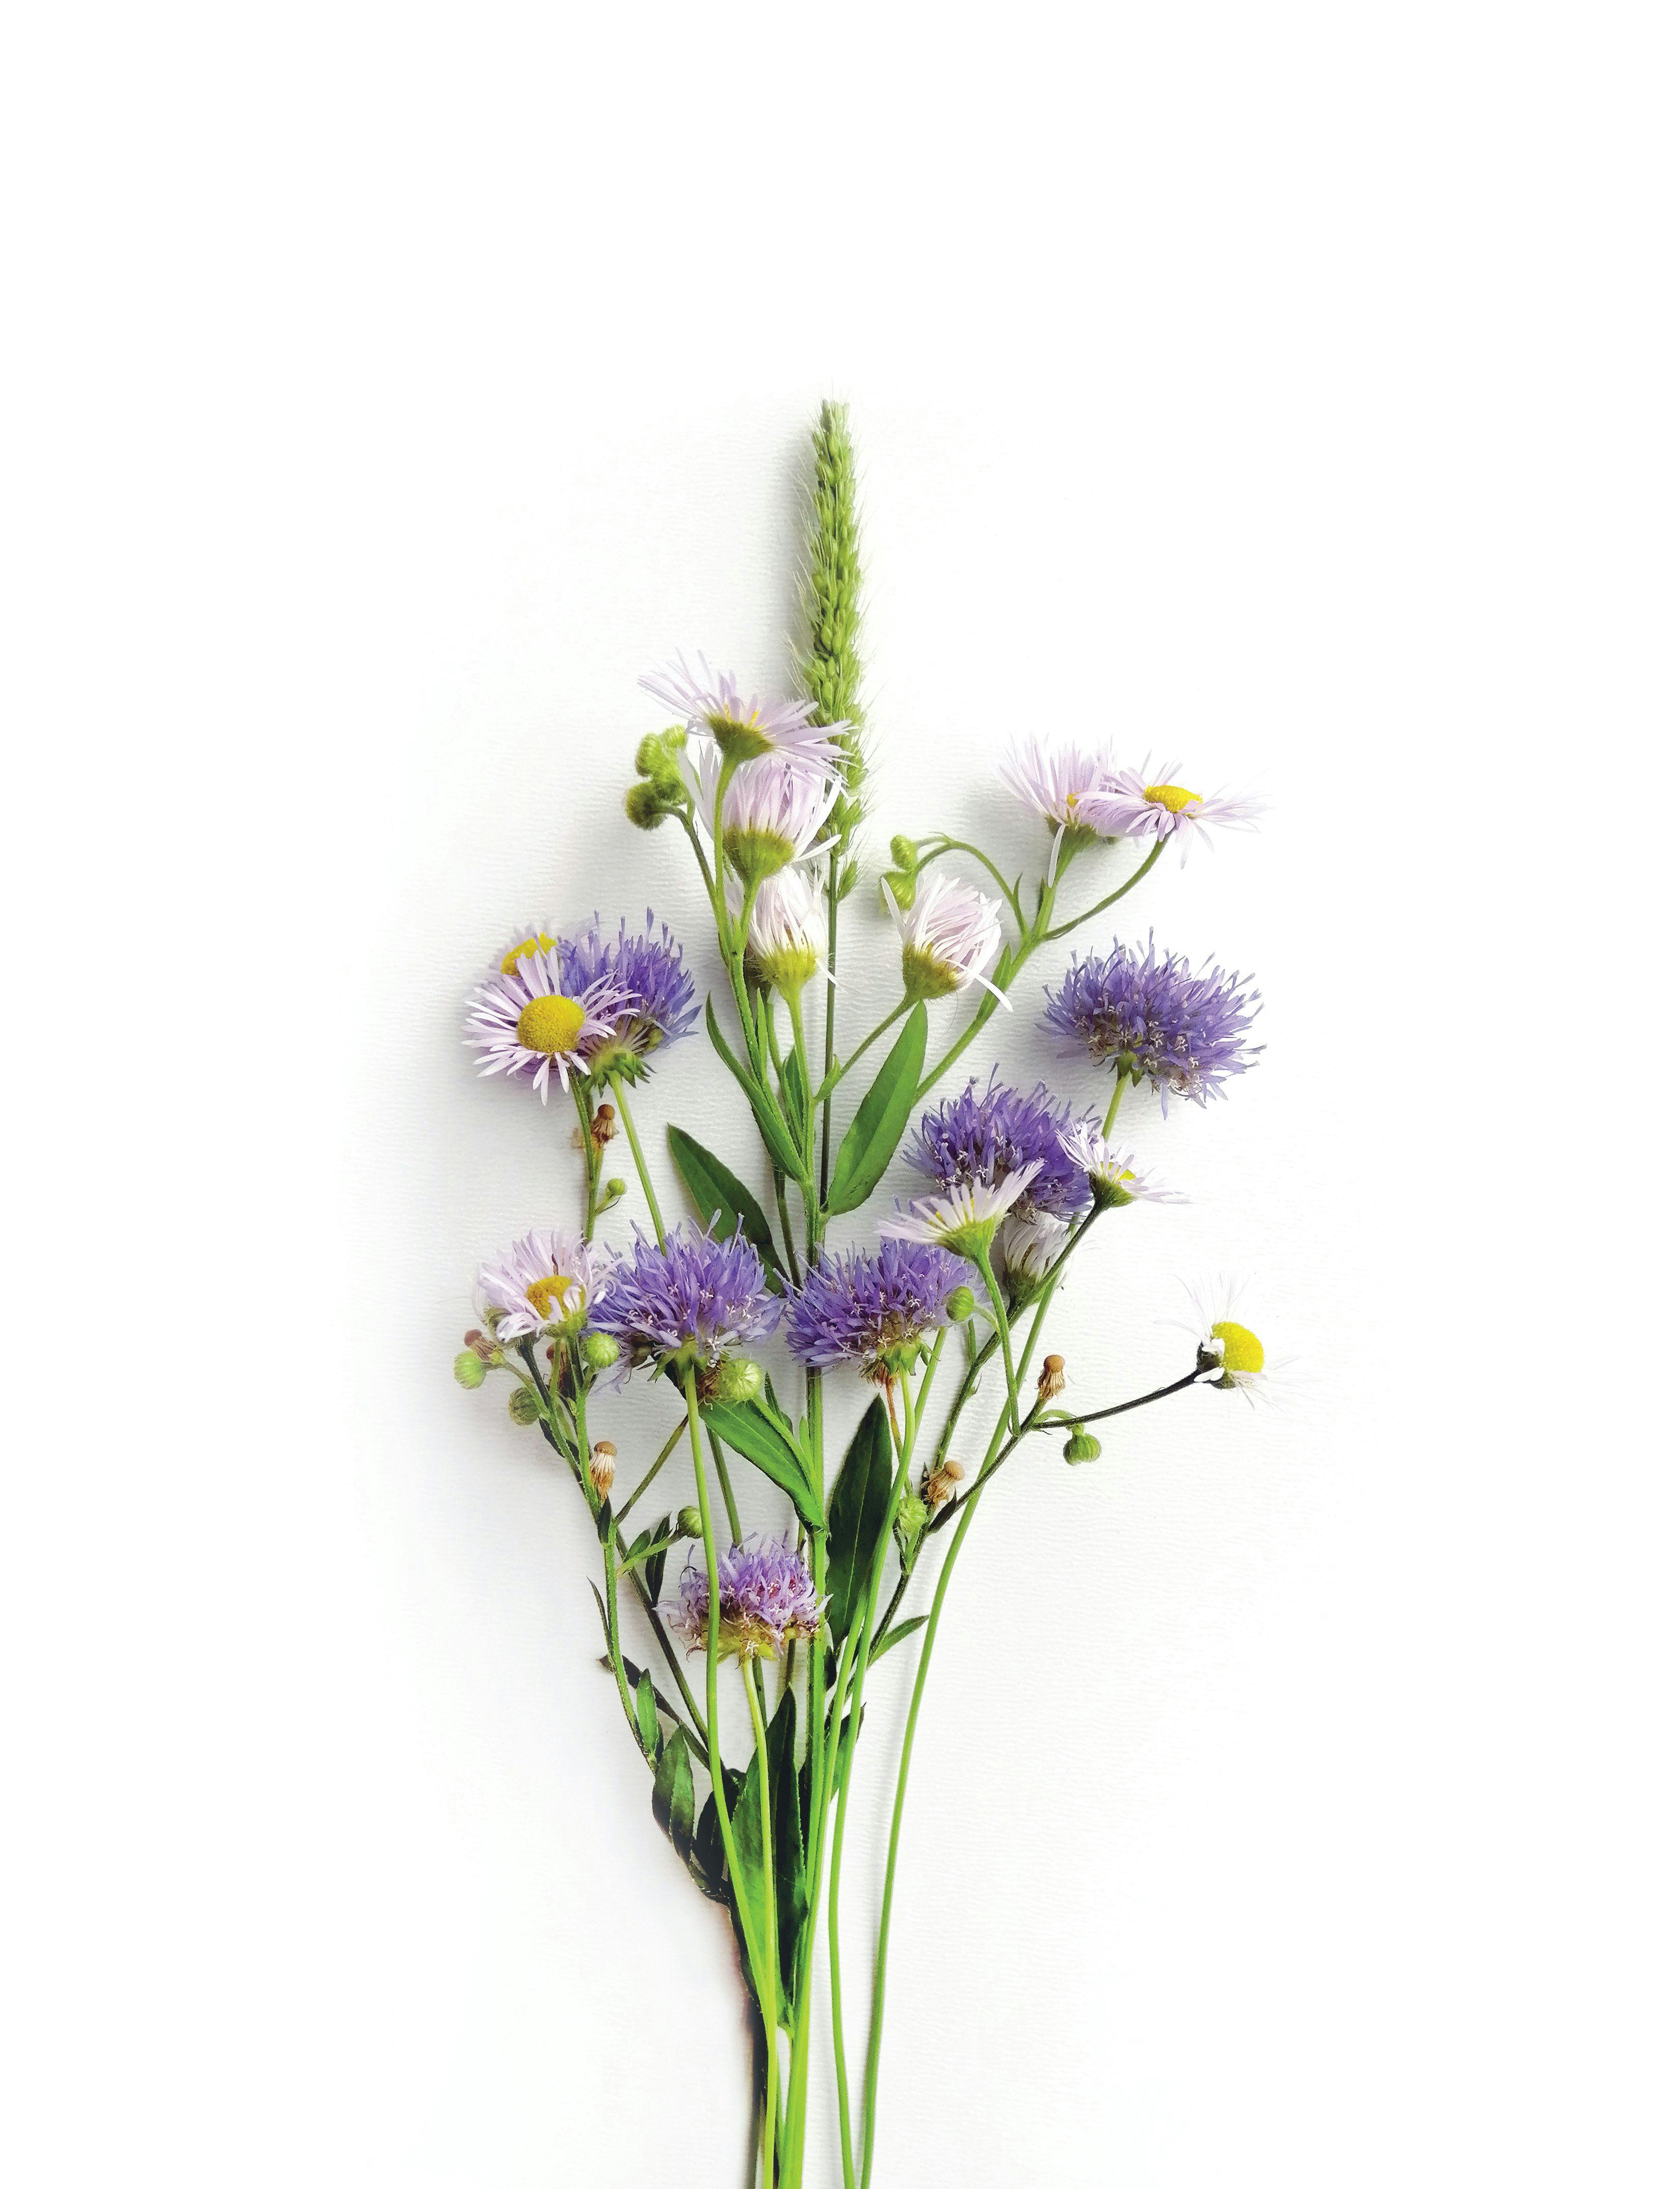 wildflowers_Yatakviju/Adobe Stock